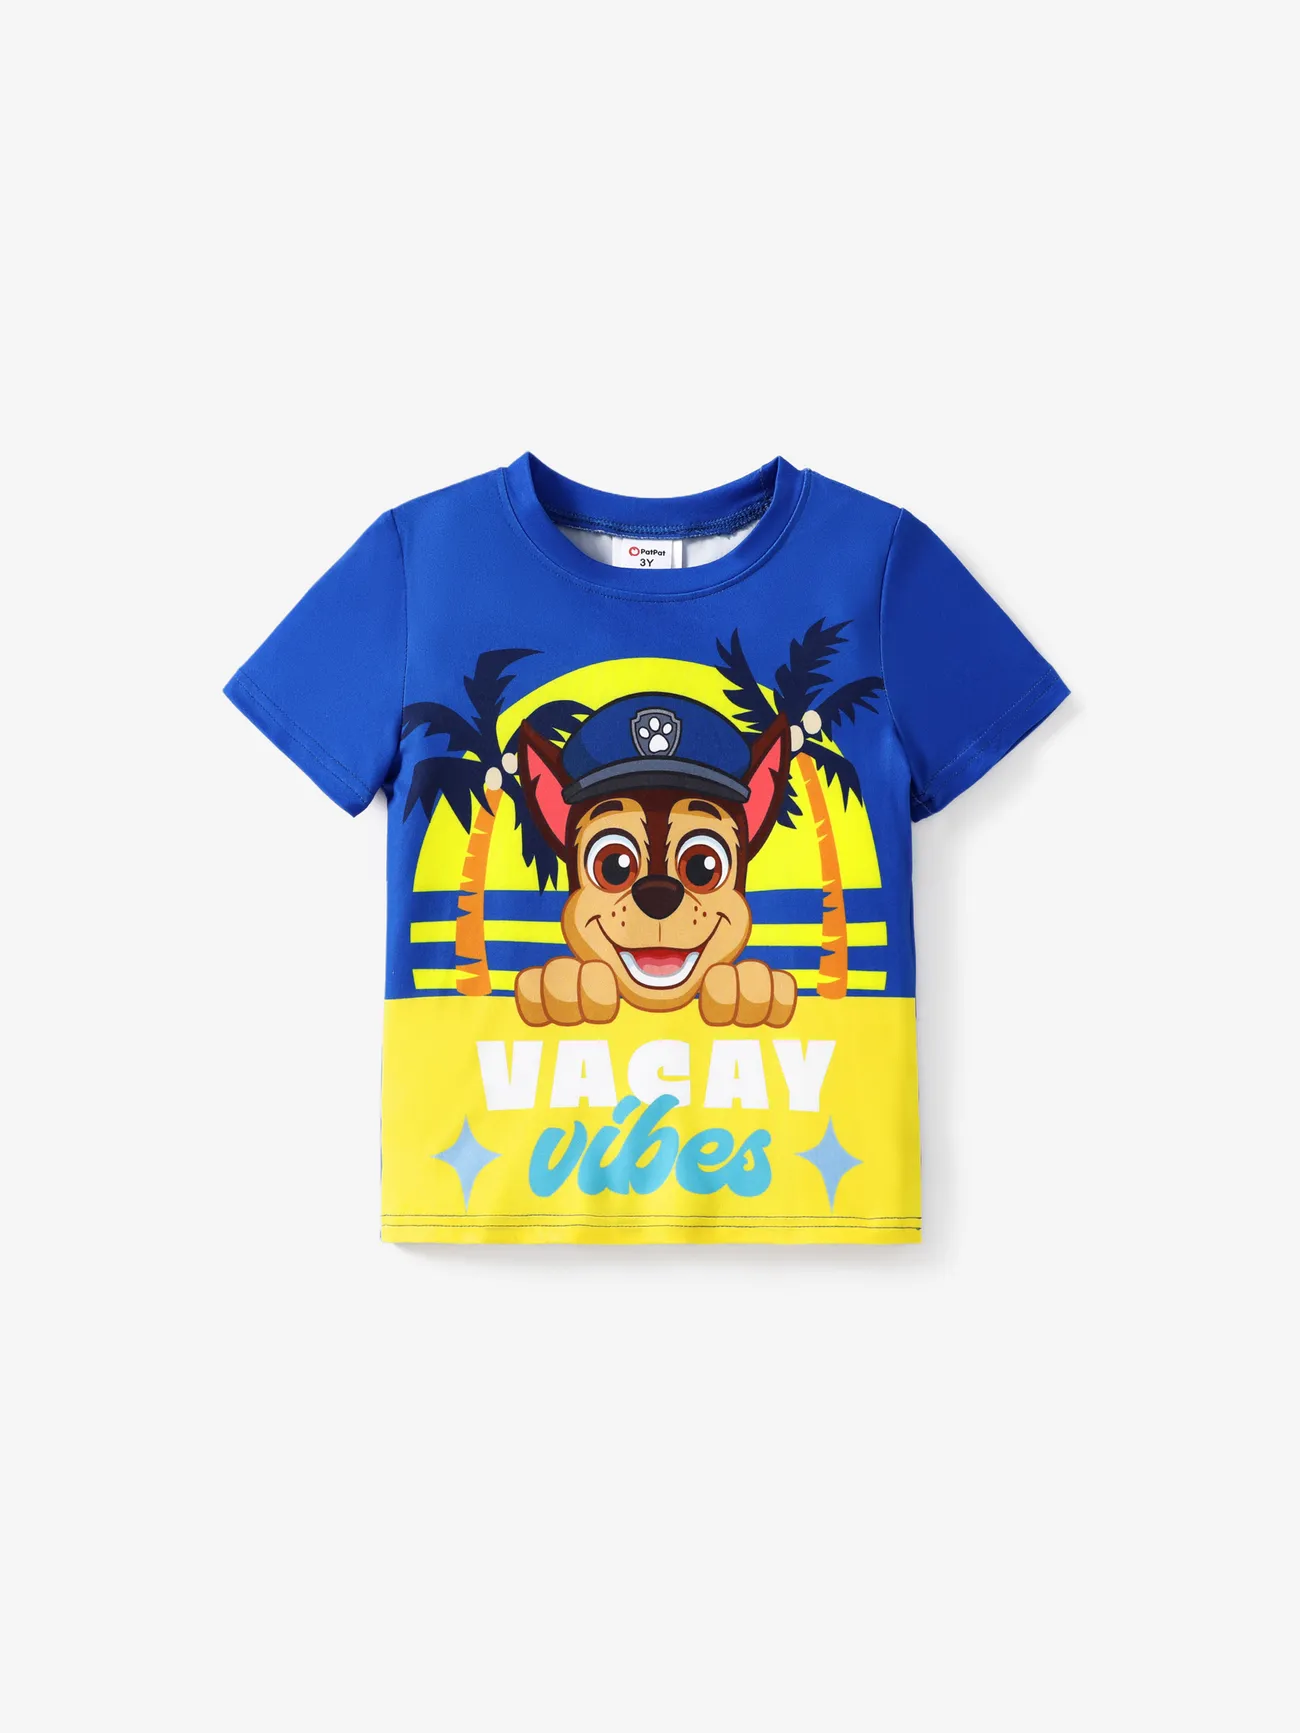 Paw Patrol Toddler Boys/Girls 1pc Summer Hawaii Style Character Print T-shirt Blue big image 1